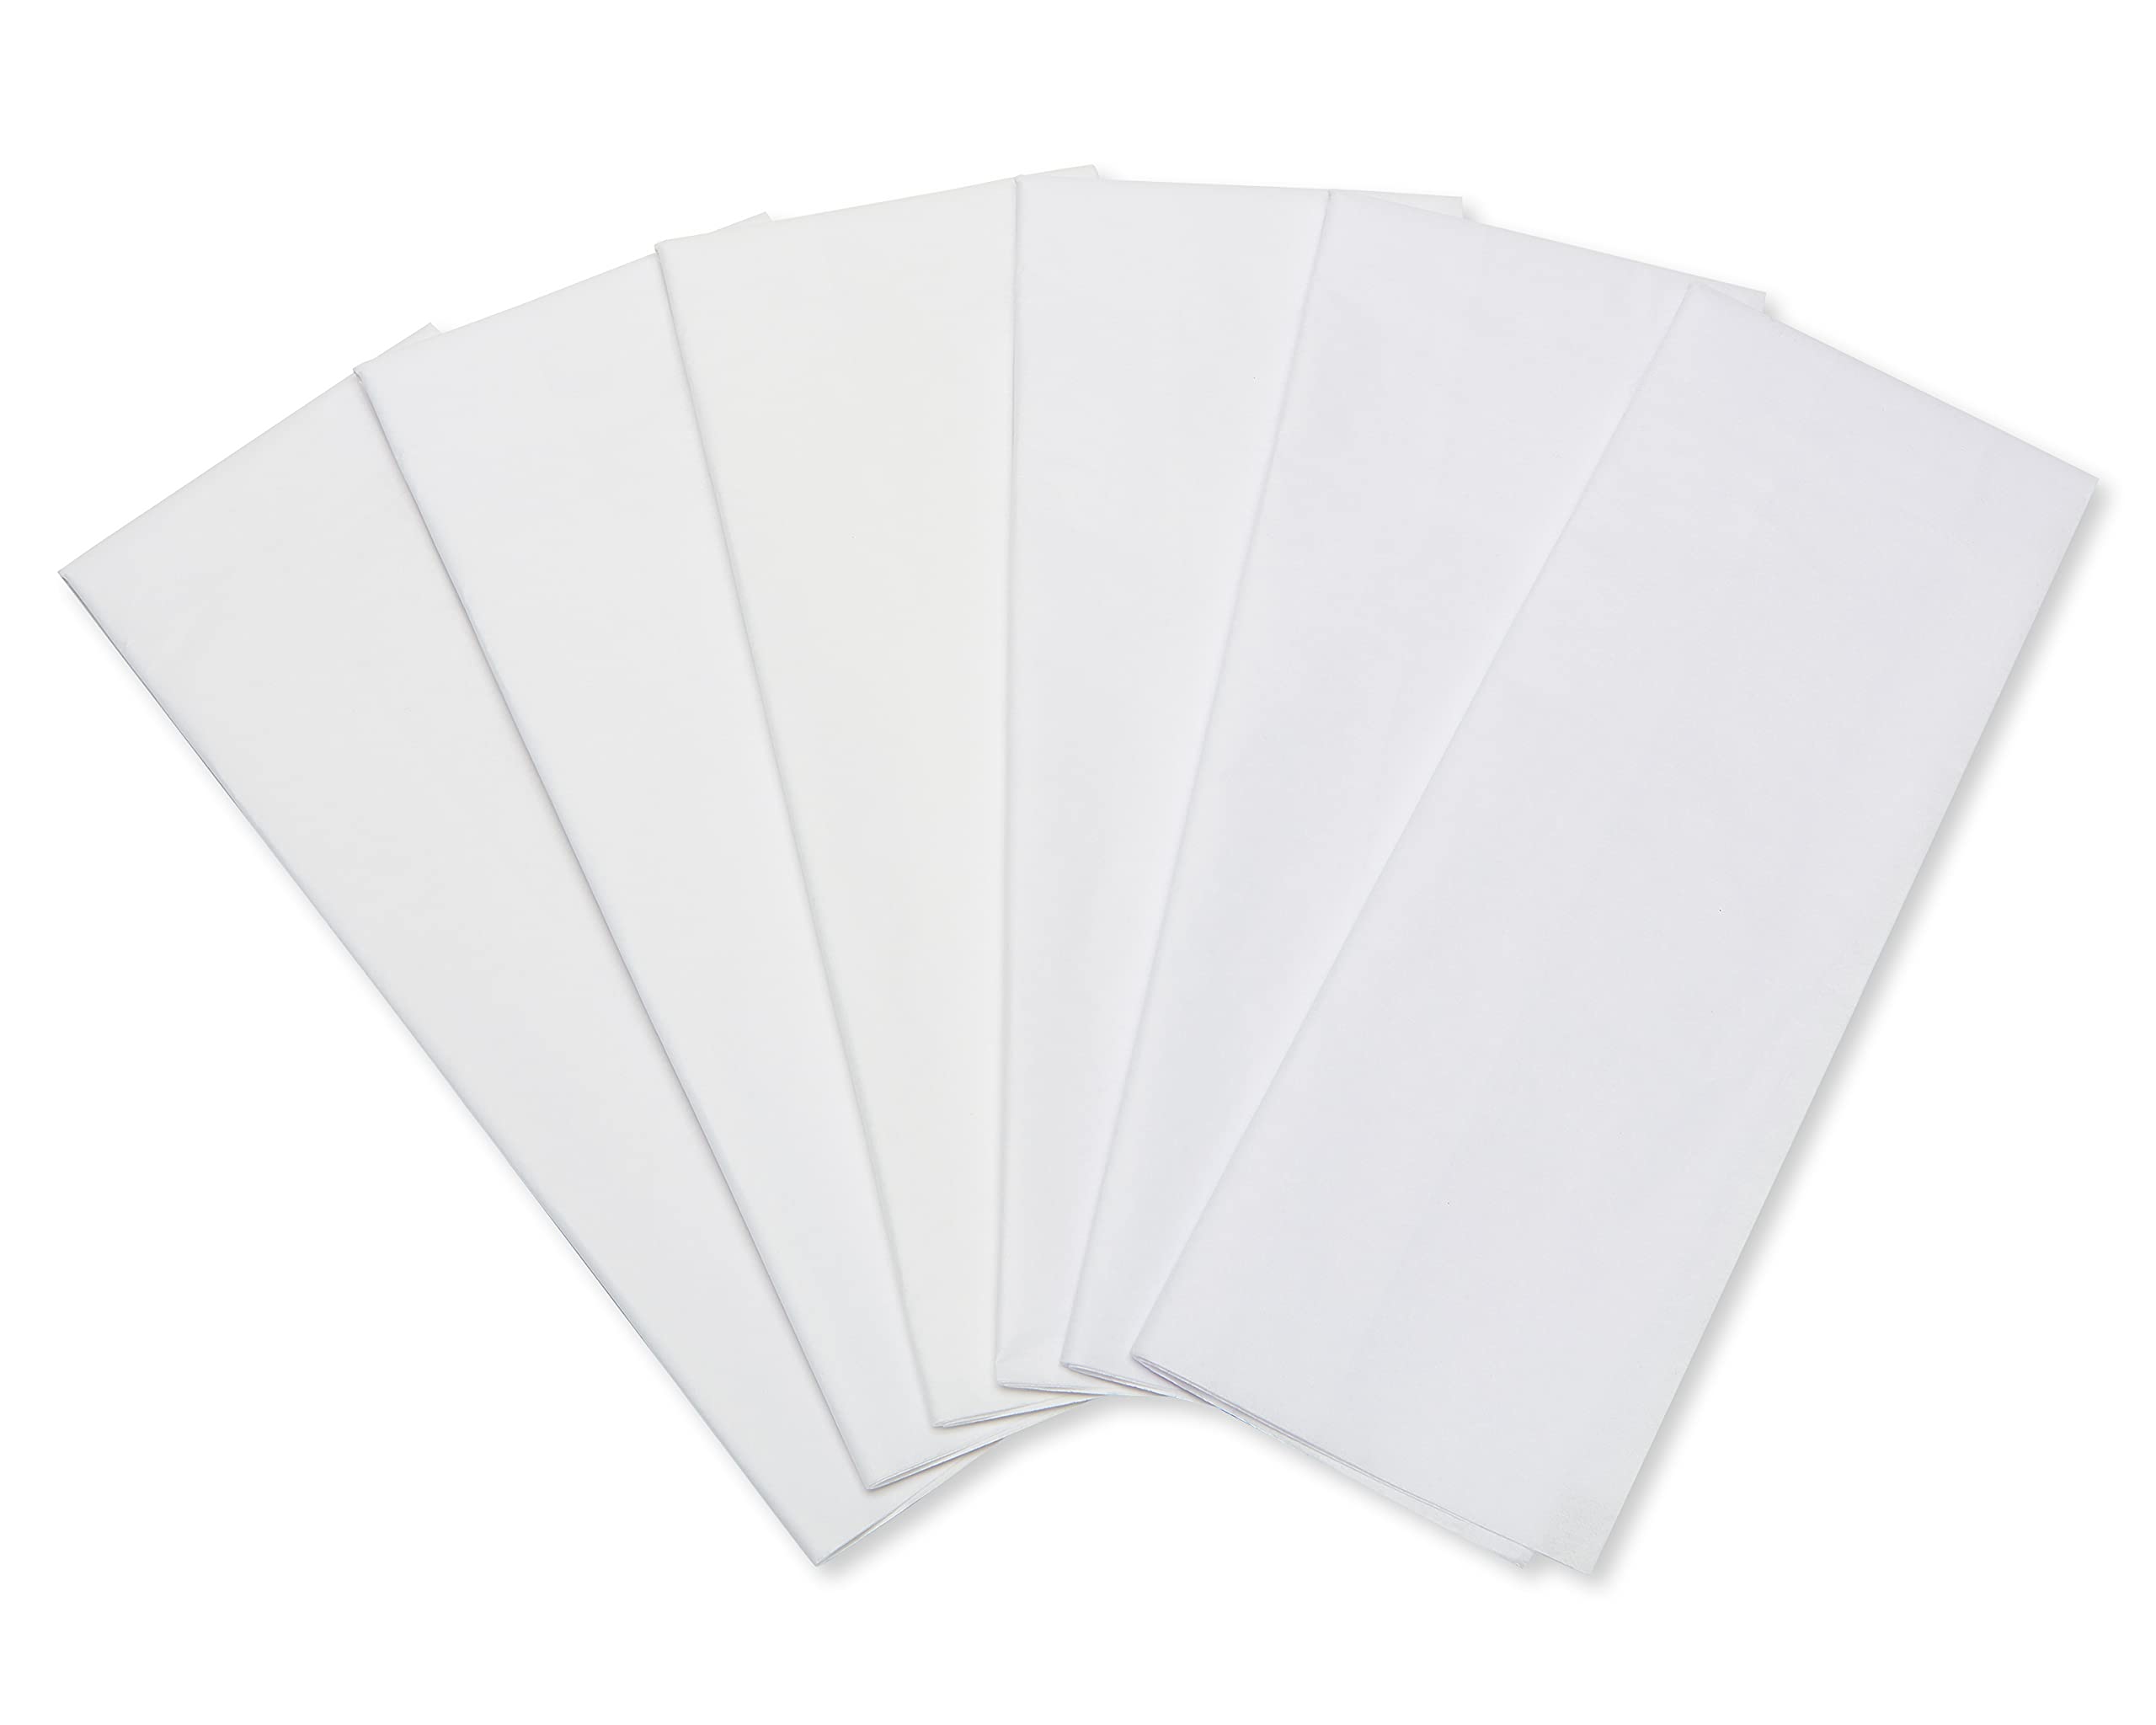 American Greetings 50 Sheet White Tissue Paper 20